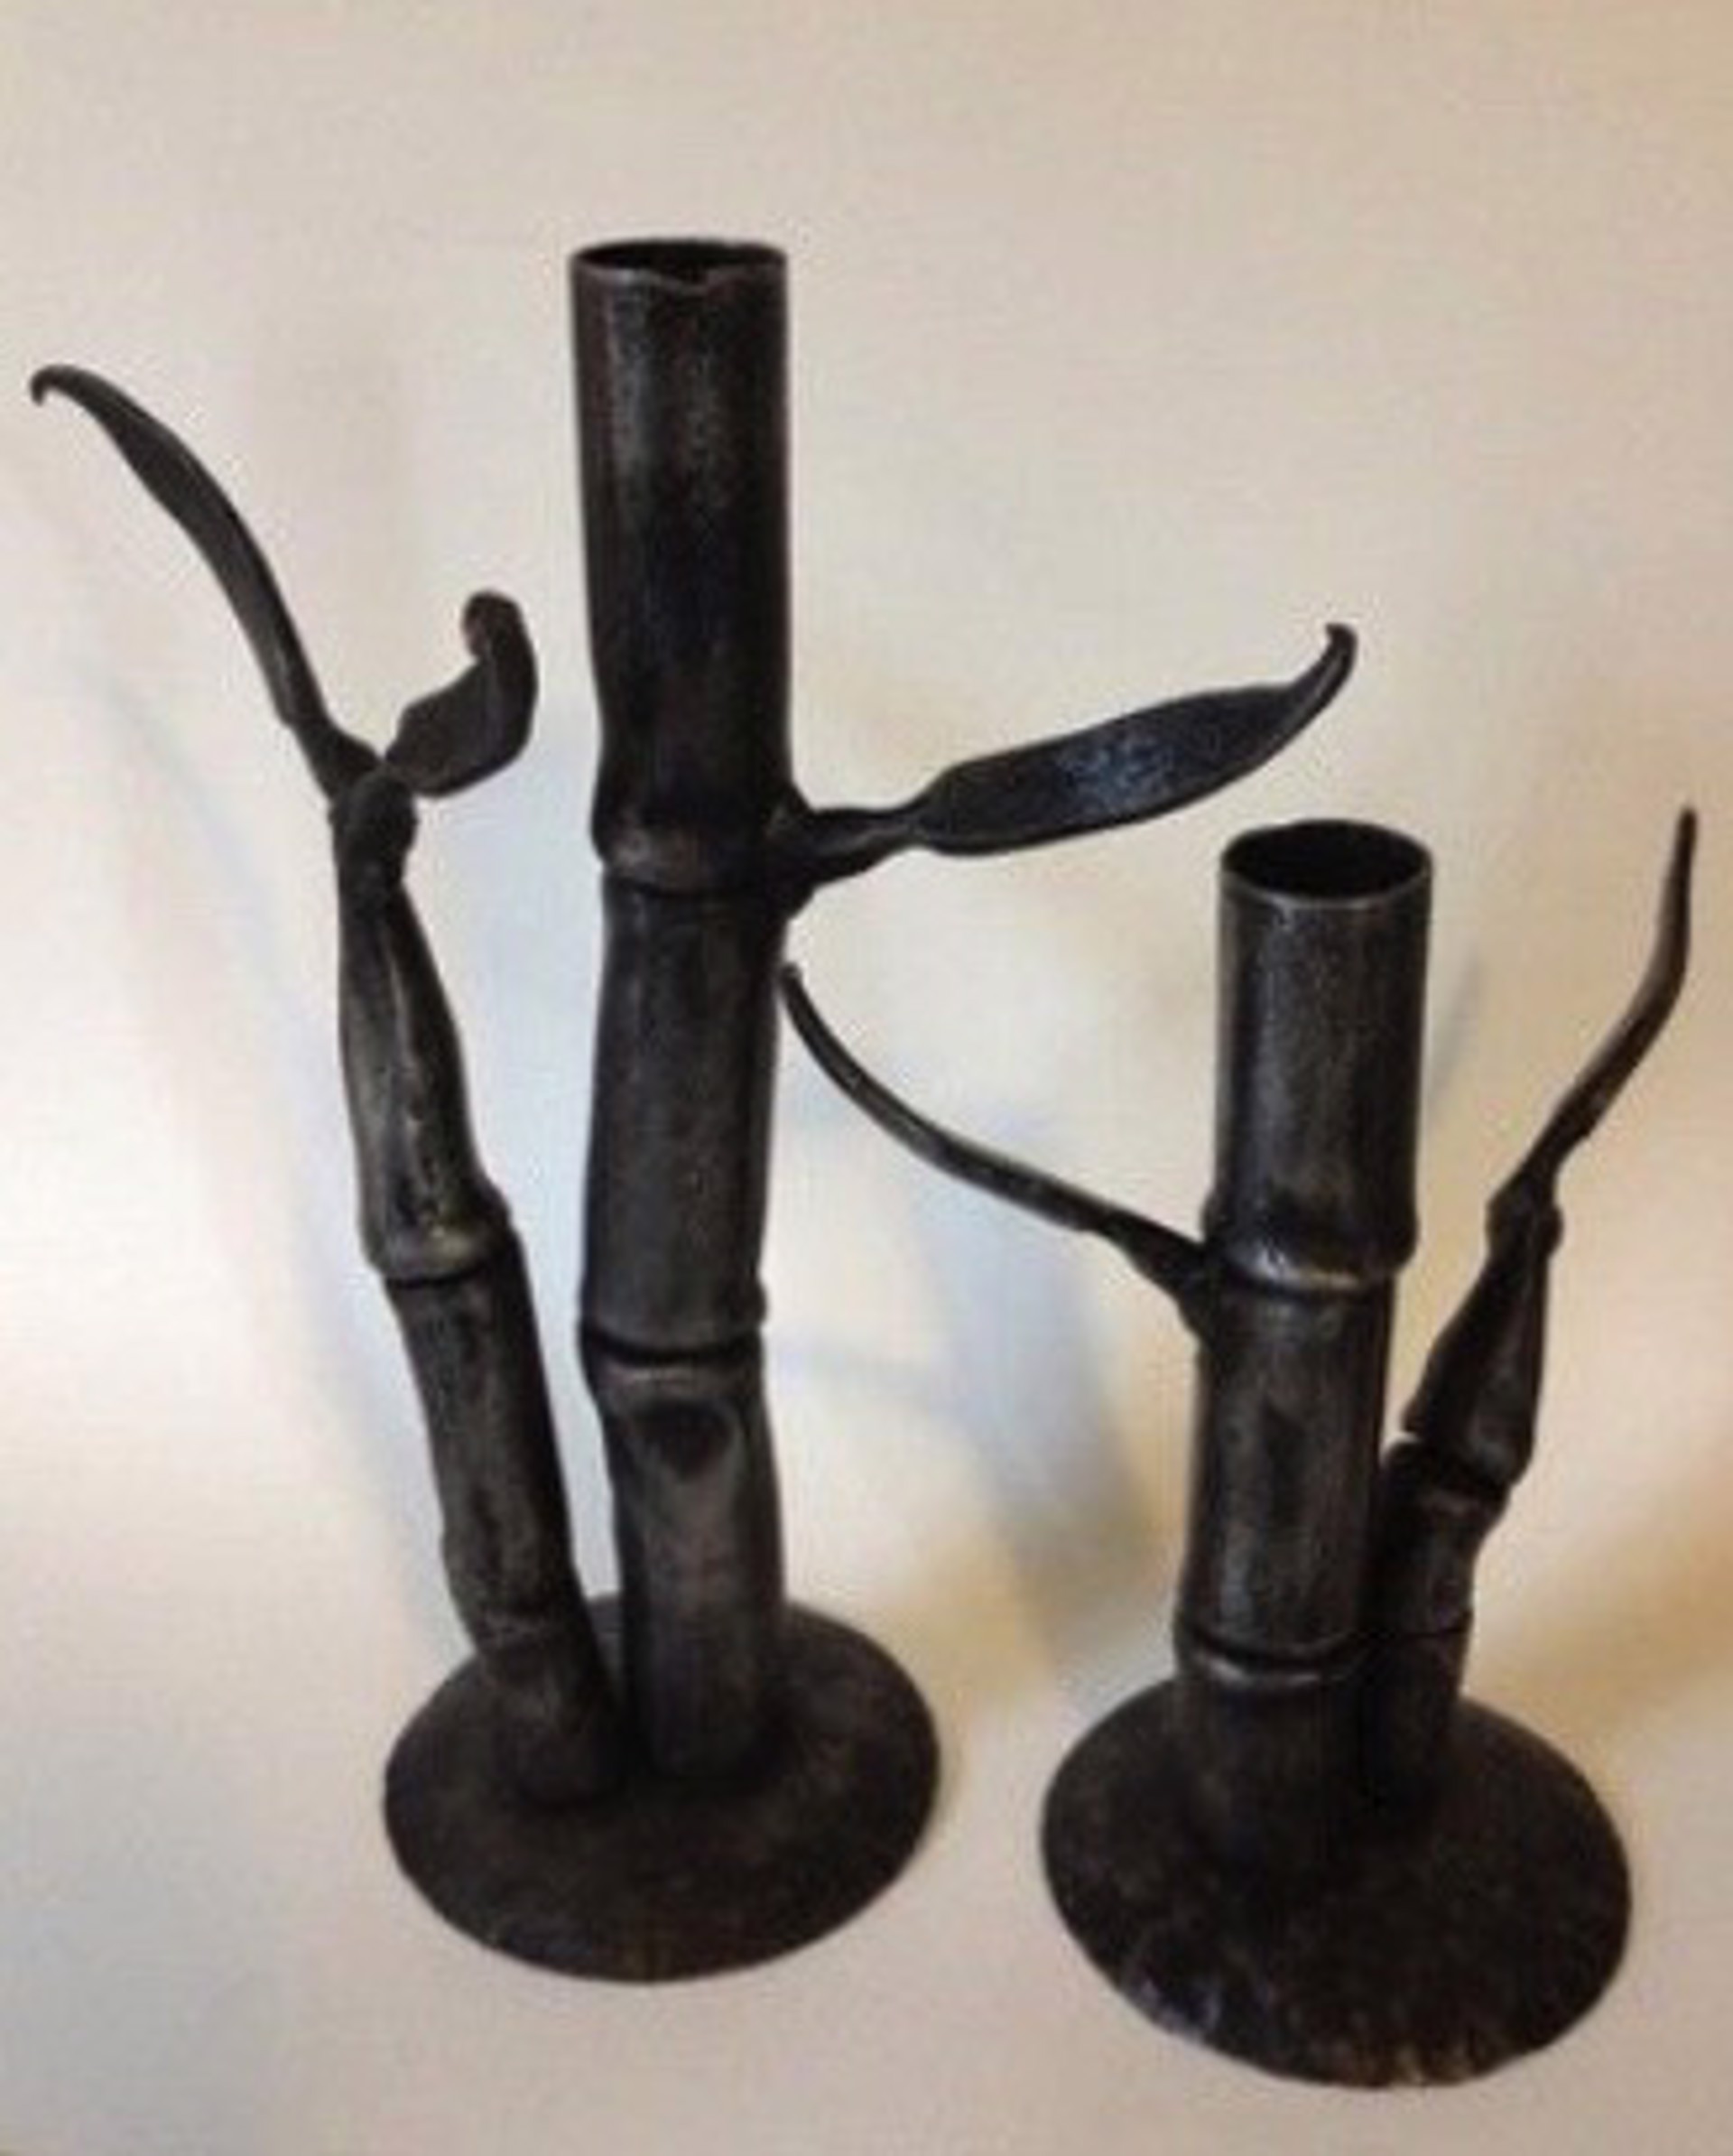 Bamboo Candlestick holders set by Corrina Sephora